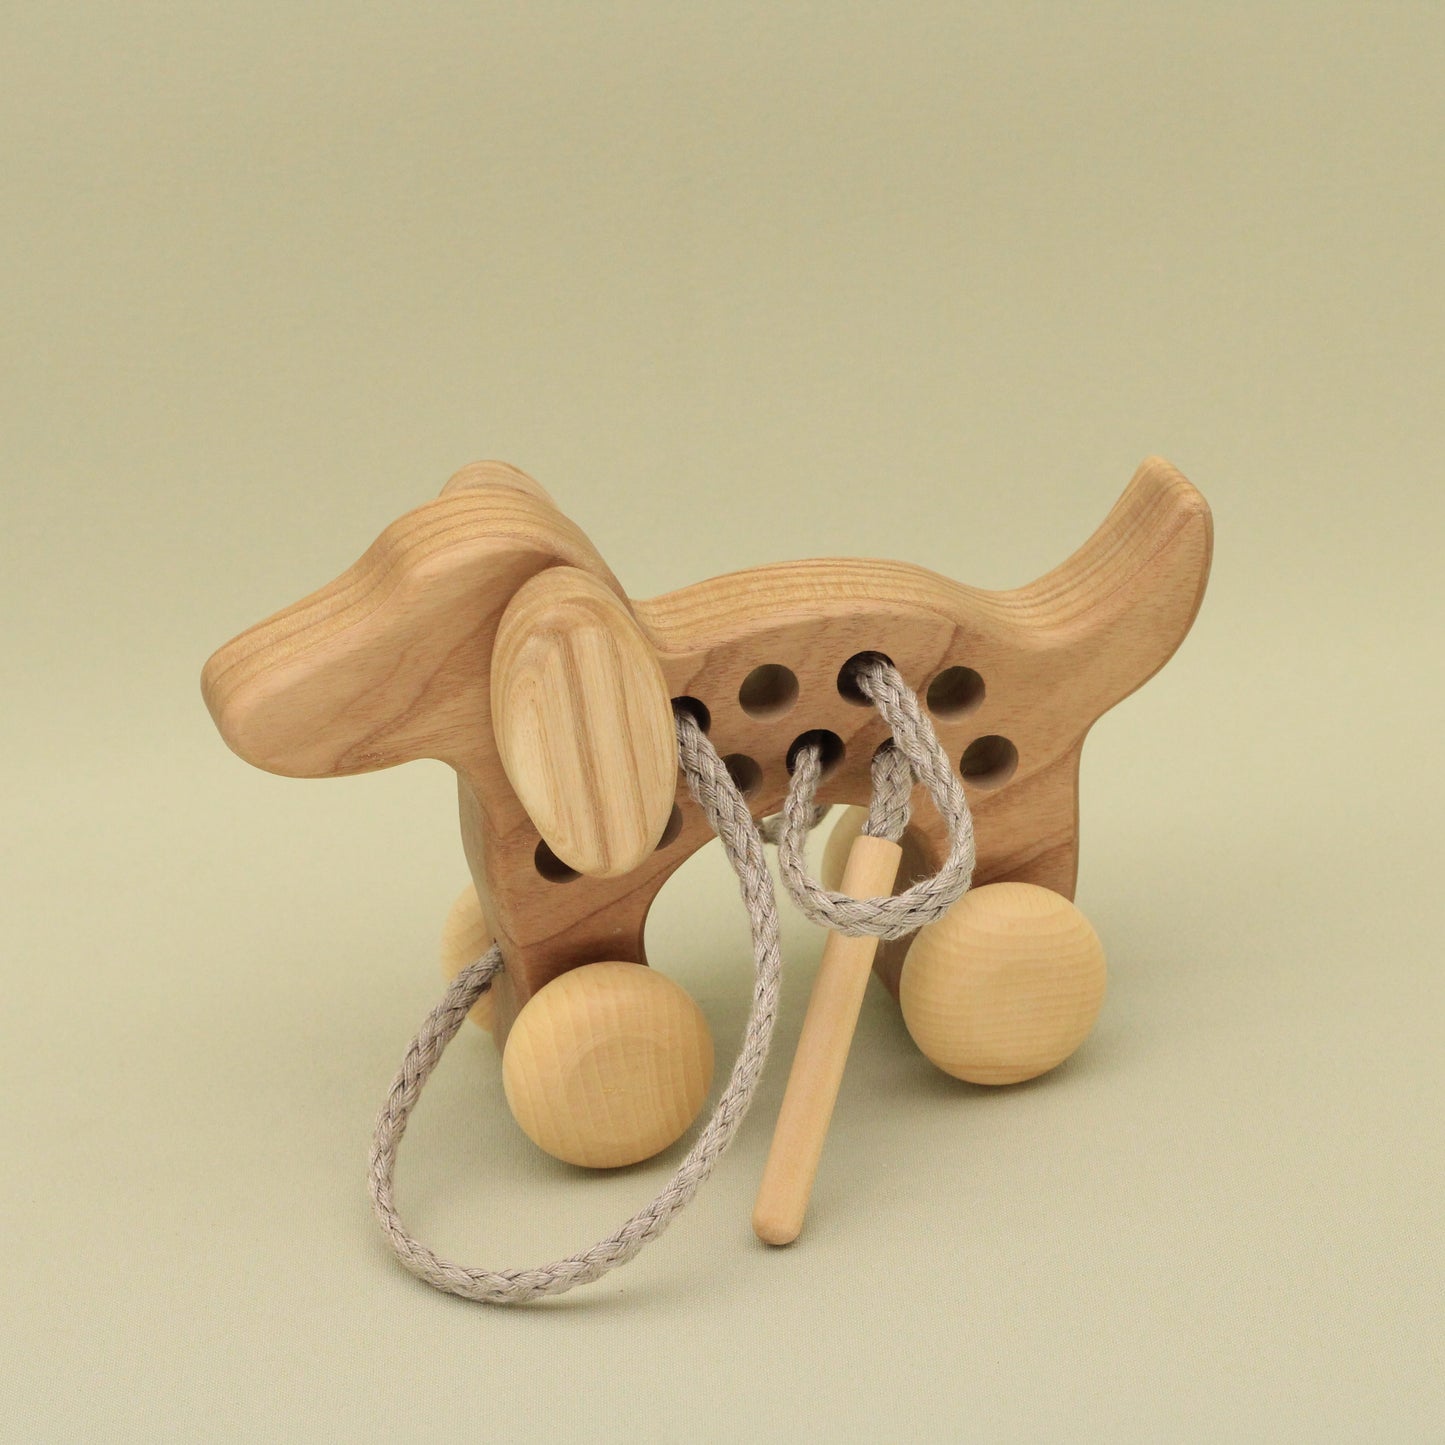 Lotes Toys Natural Wooden Threading Lacing Dog TT52